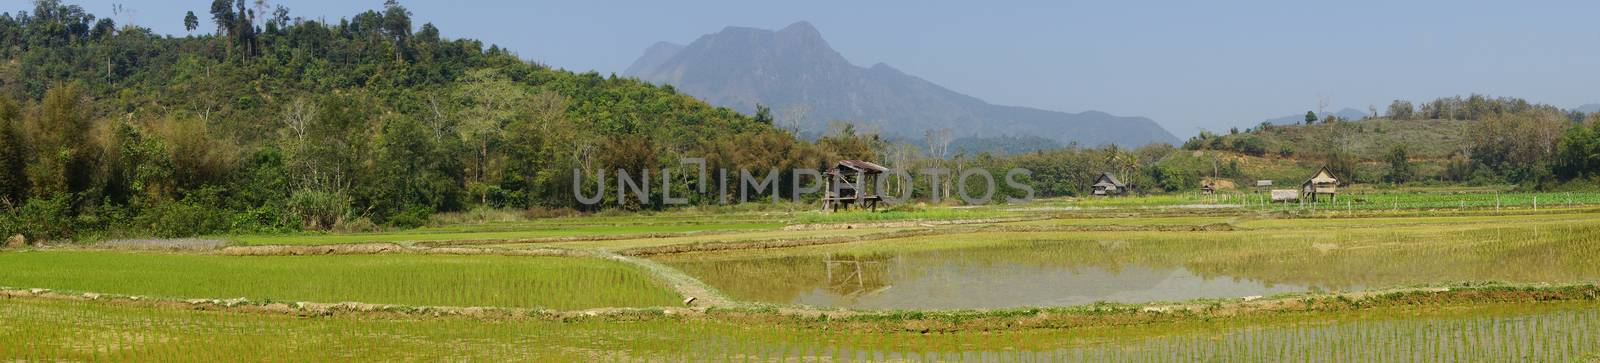 Rice field, Laos, Asia by alfotokunst